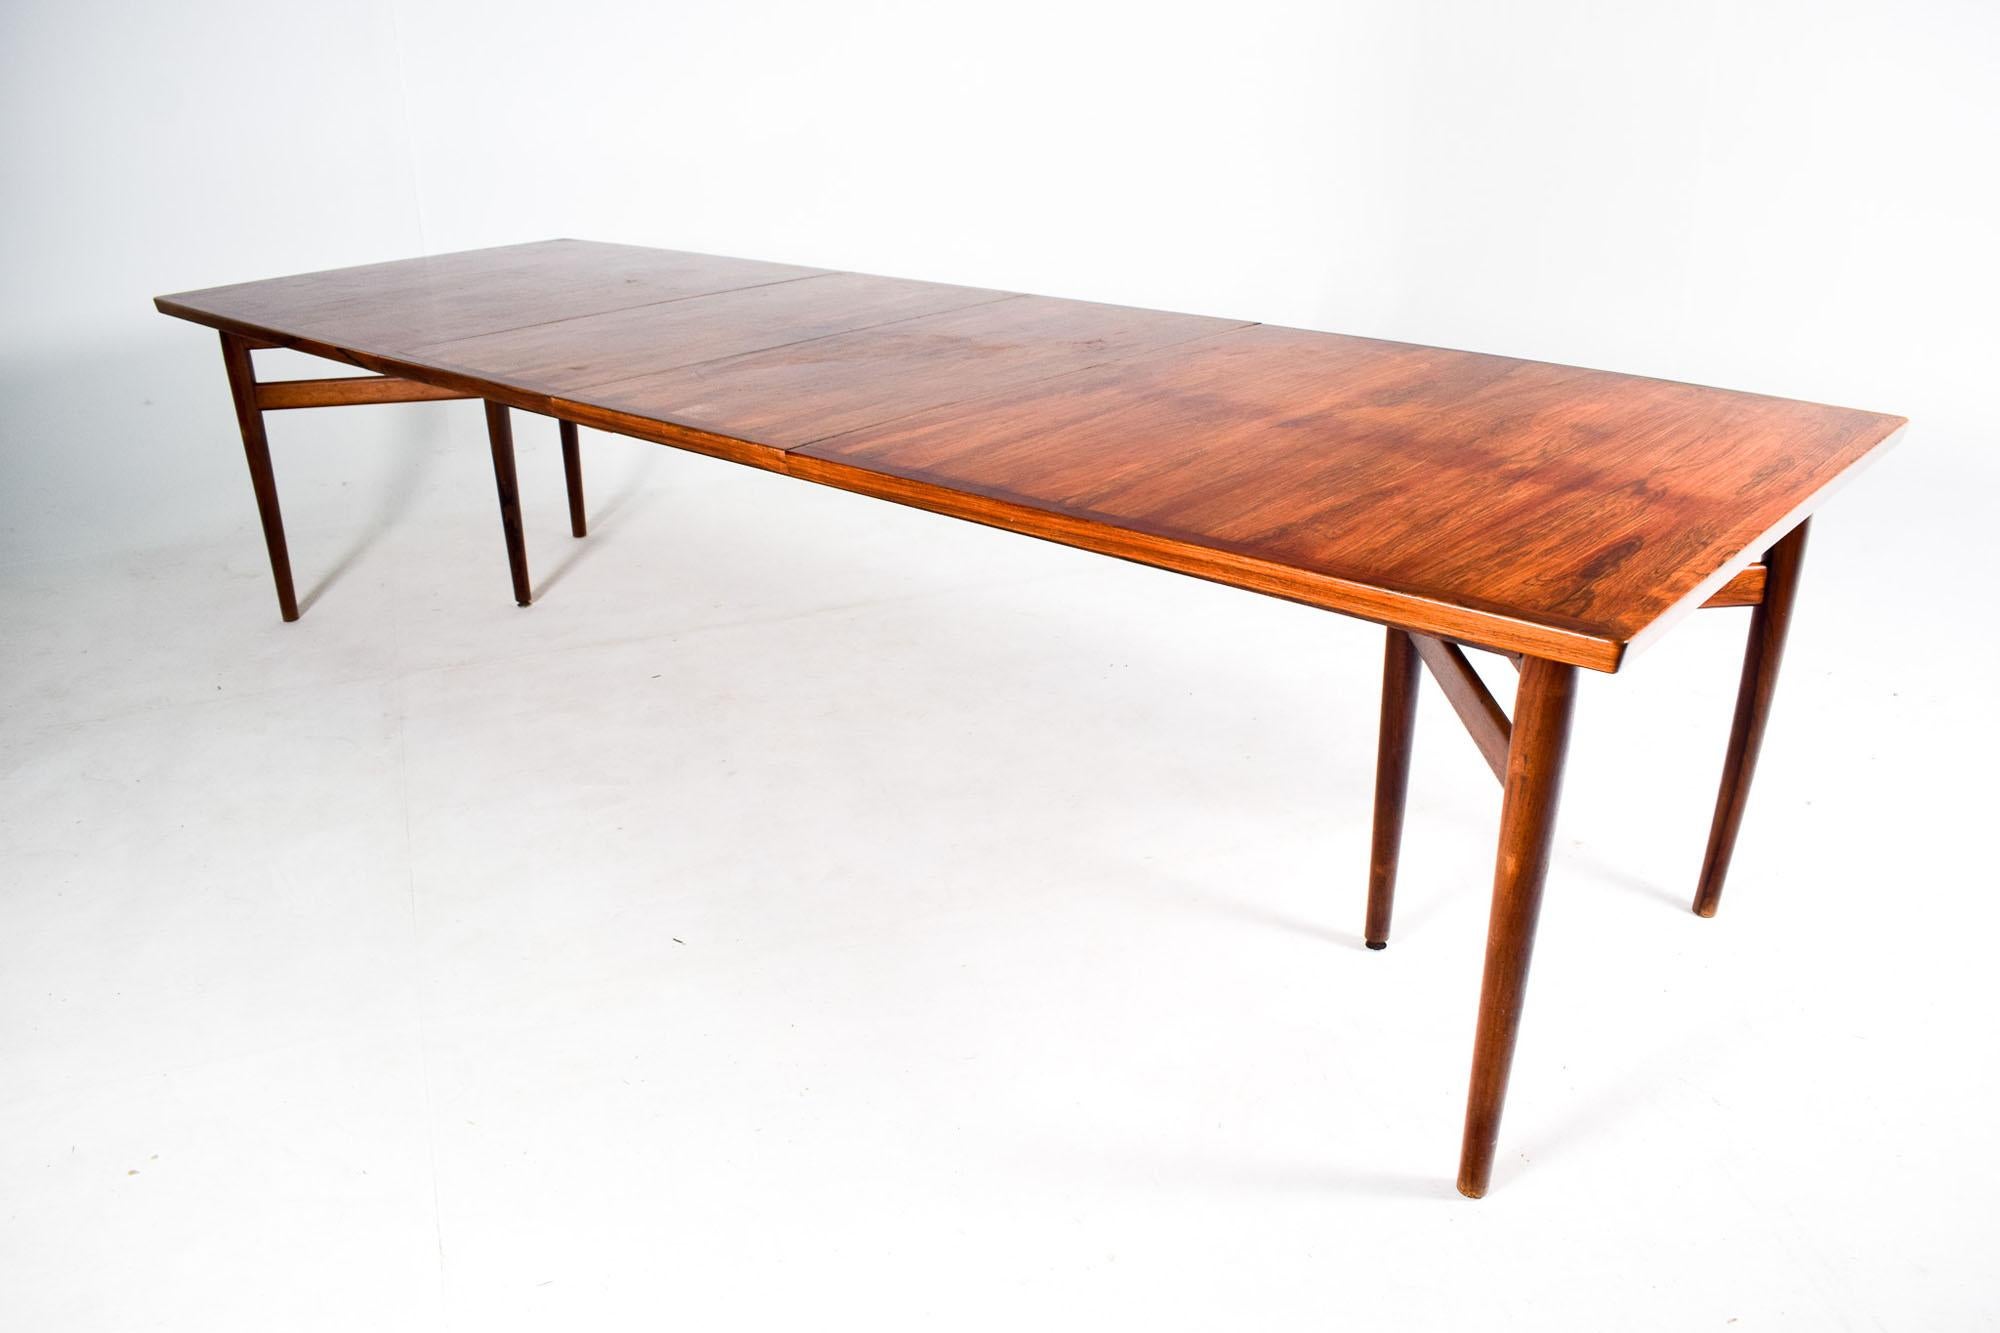 Rosewood Midcentury Dining Table Designed by Arne Vodder for Sibast, Denmark